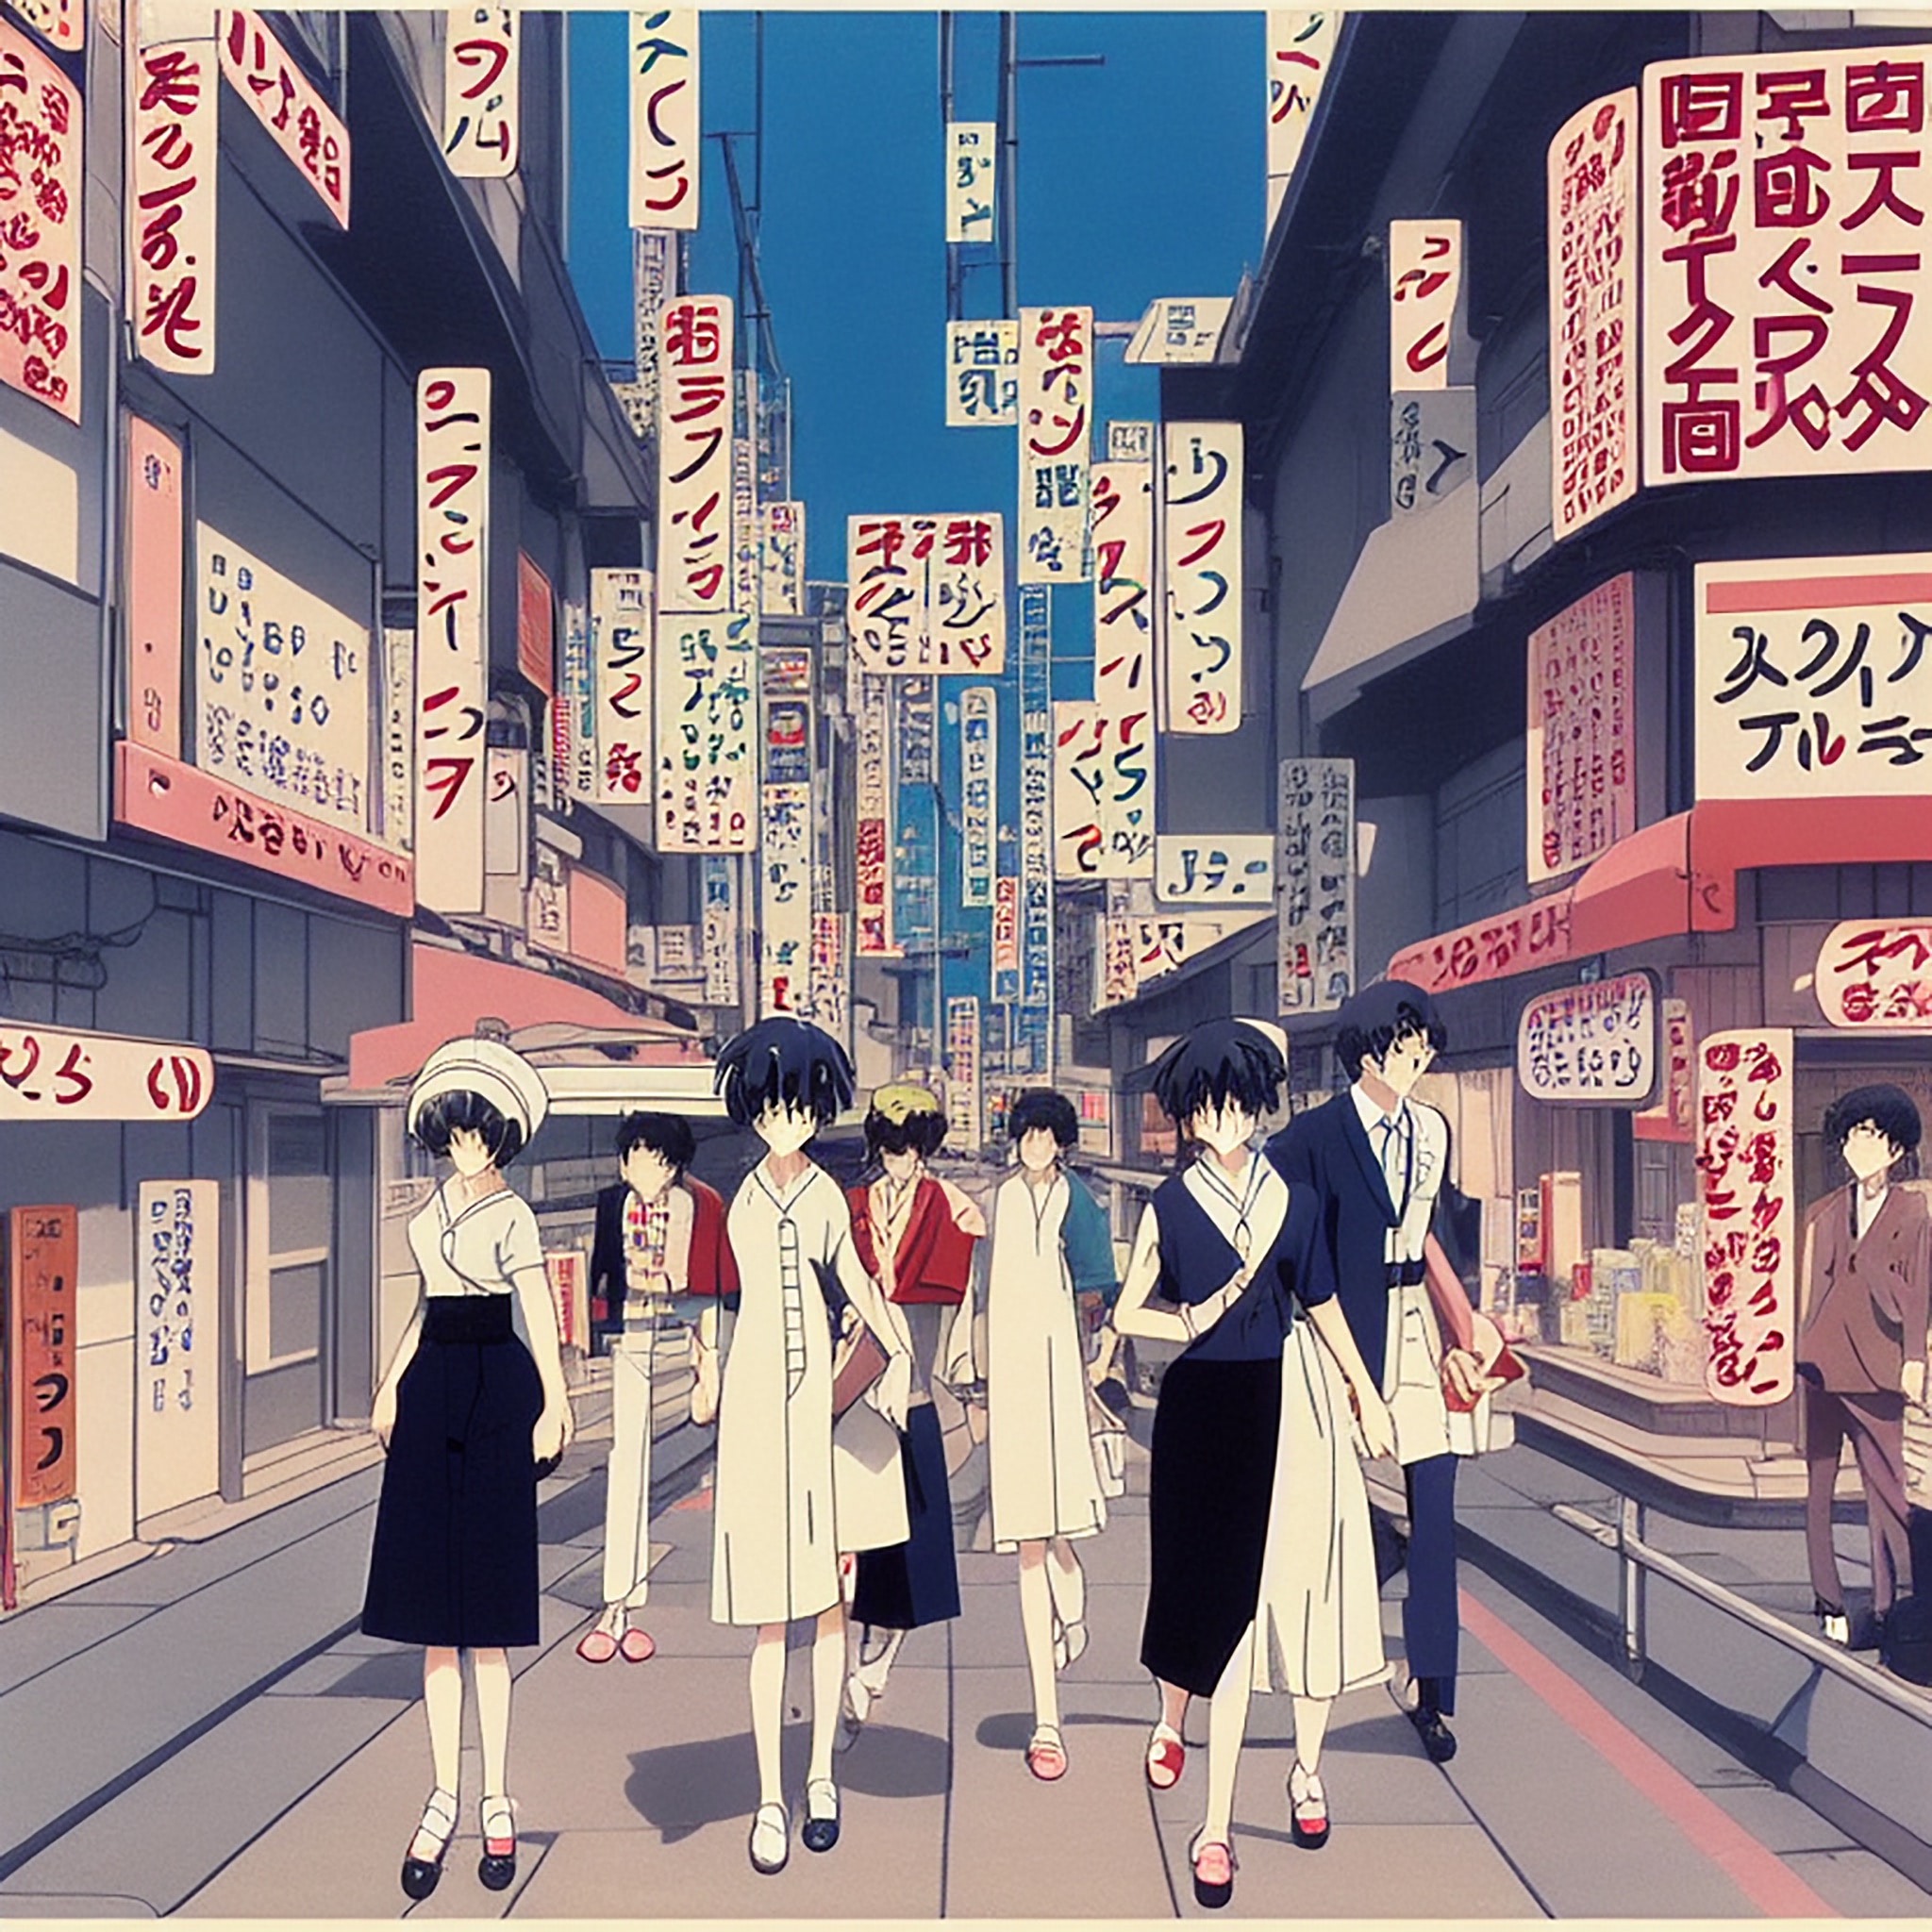 city pop cover tokyo 1960s anime style city 2